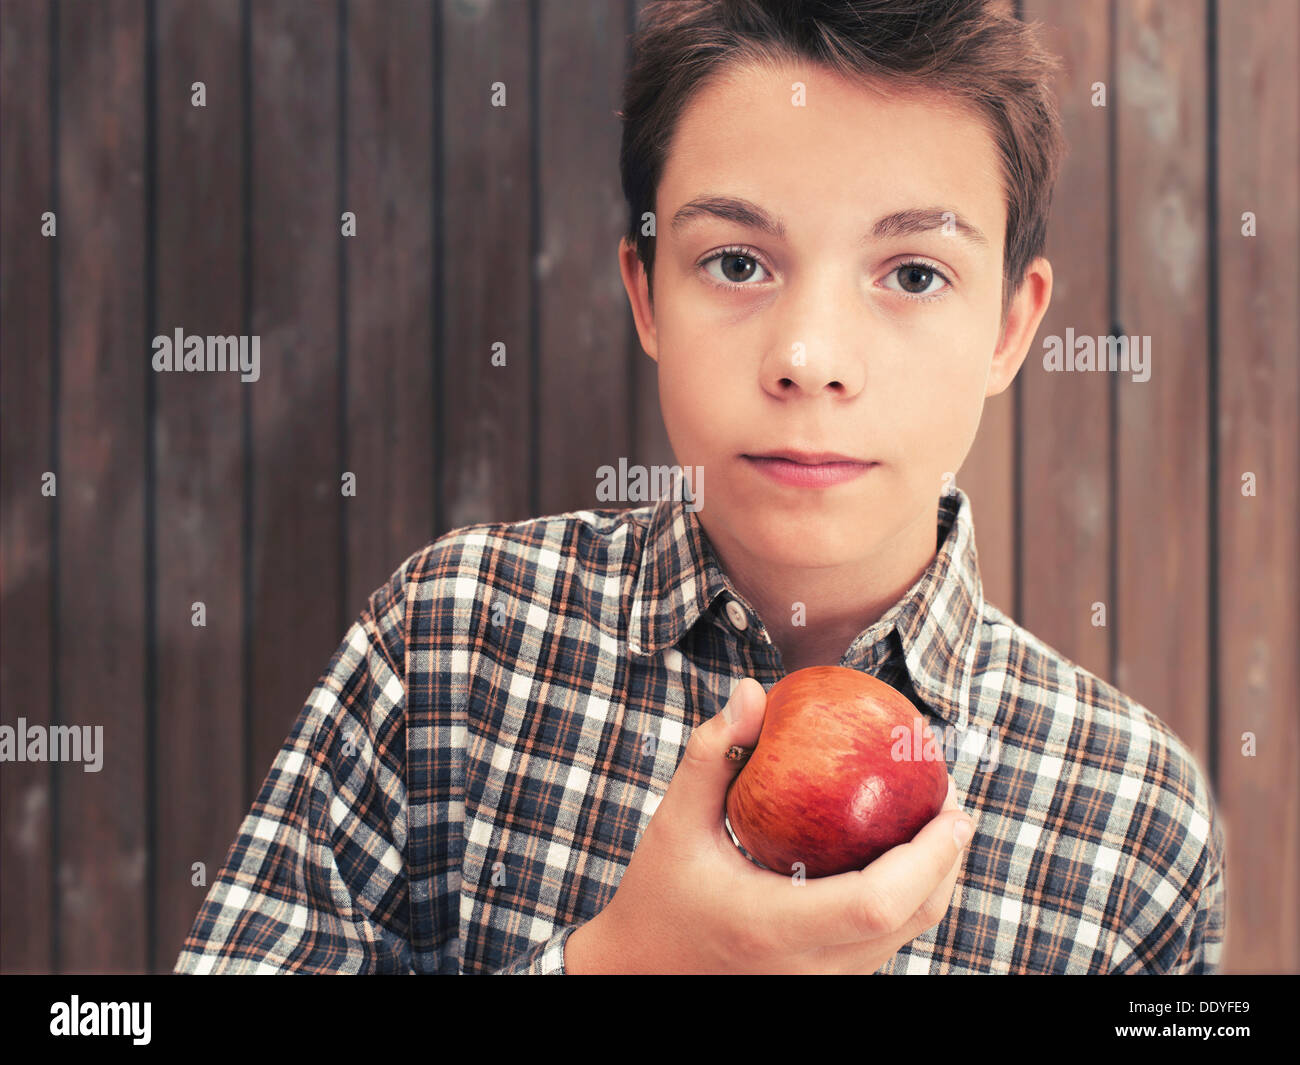 Portrait, boy, teenager eating an apple Stock Photo